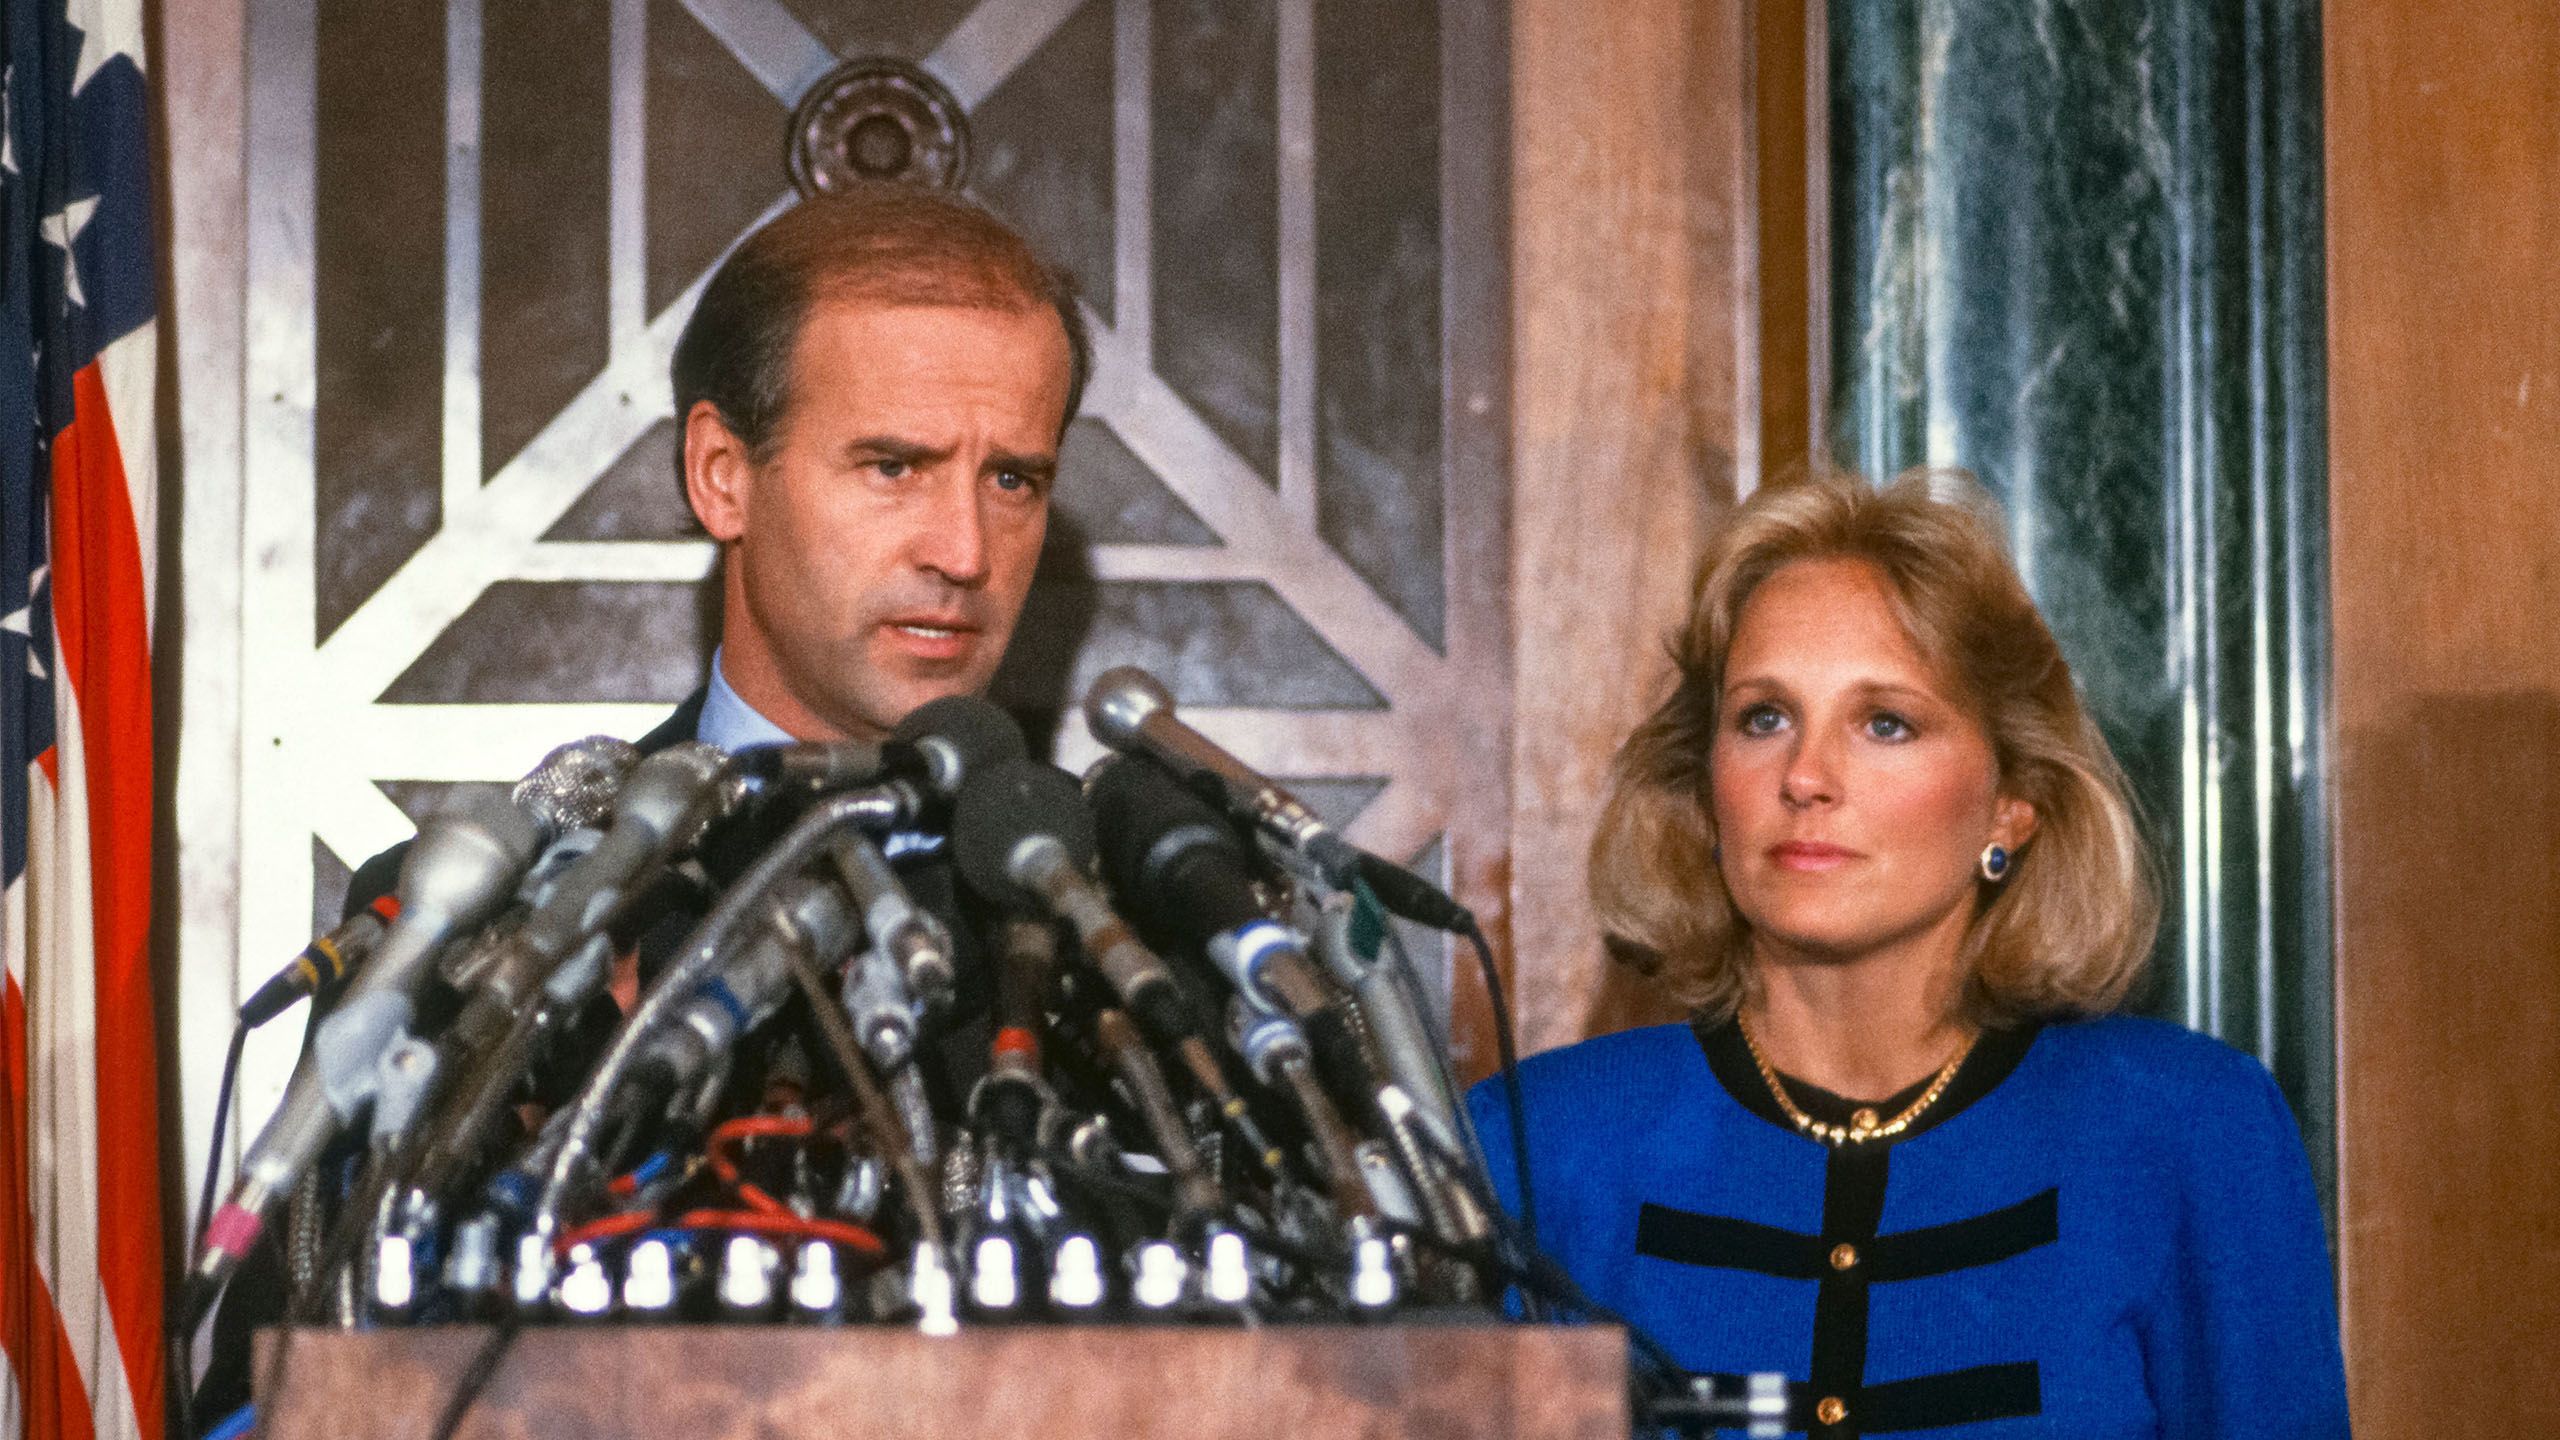 Biden with his wife Jill